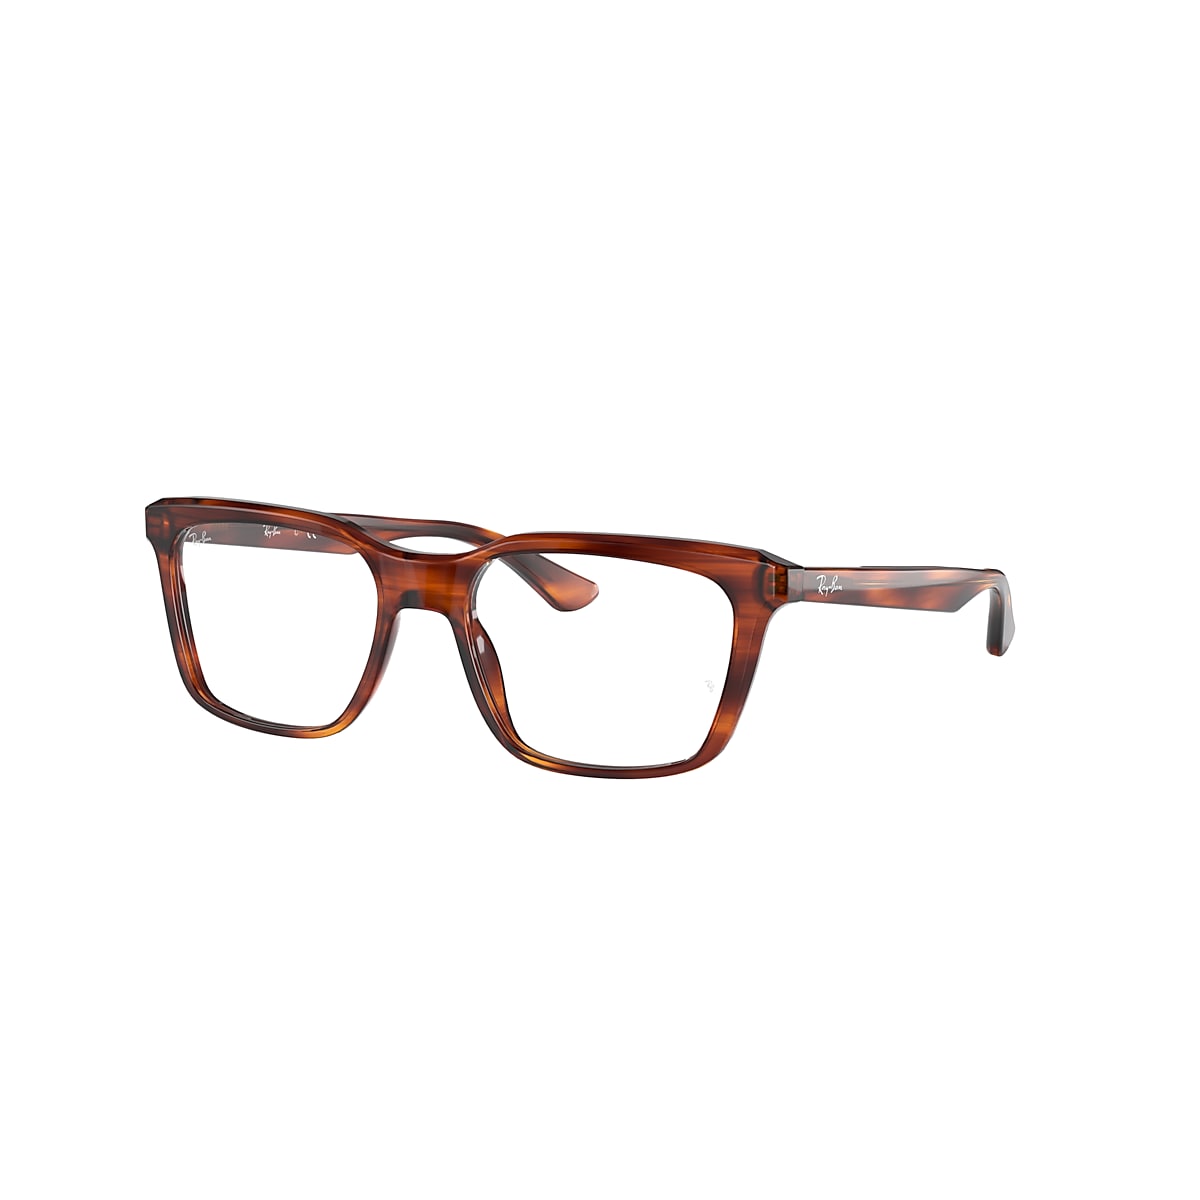 RB5391 OPTICS Eyeglasses with Striped Havana Frame - Ray-Ban